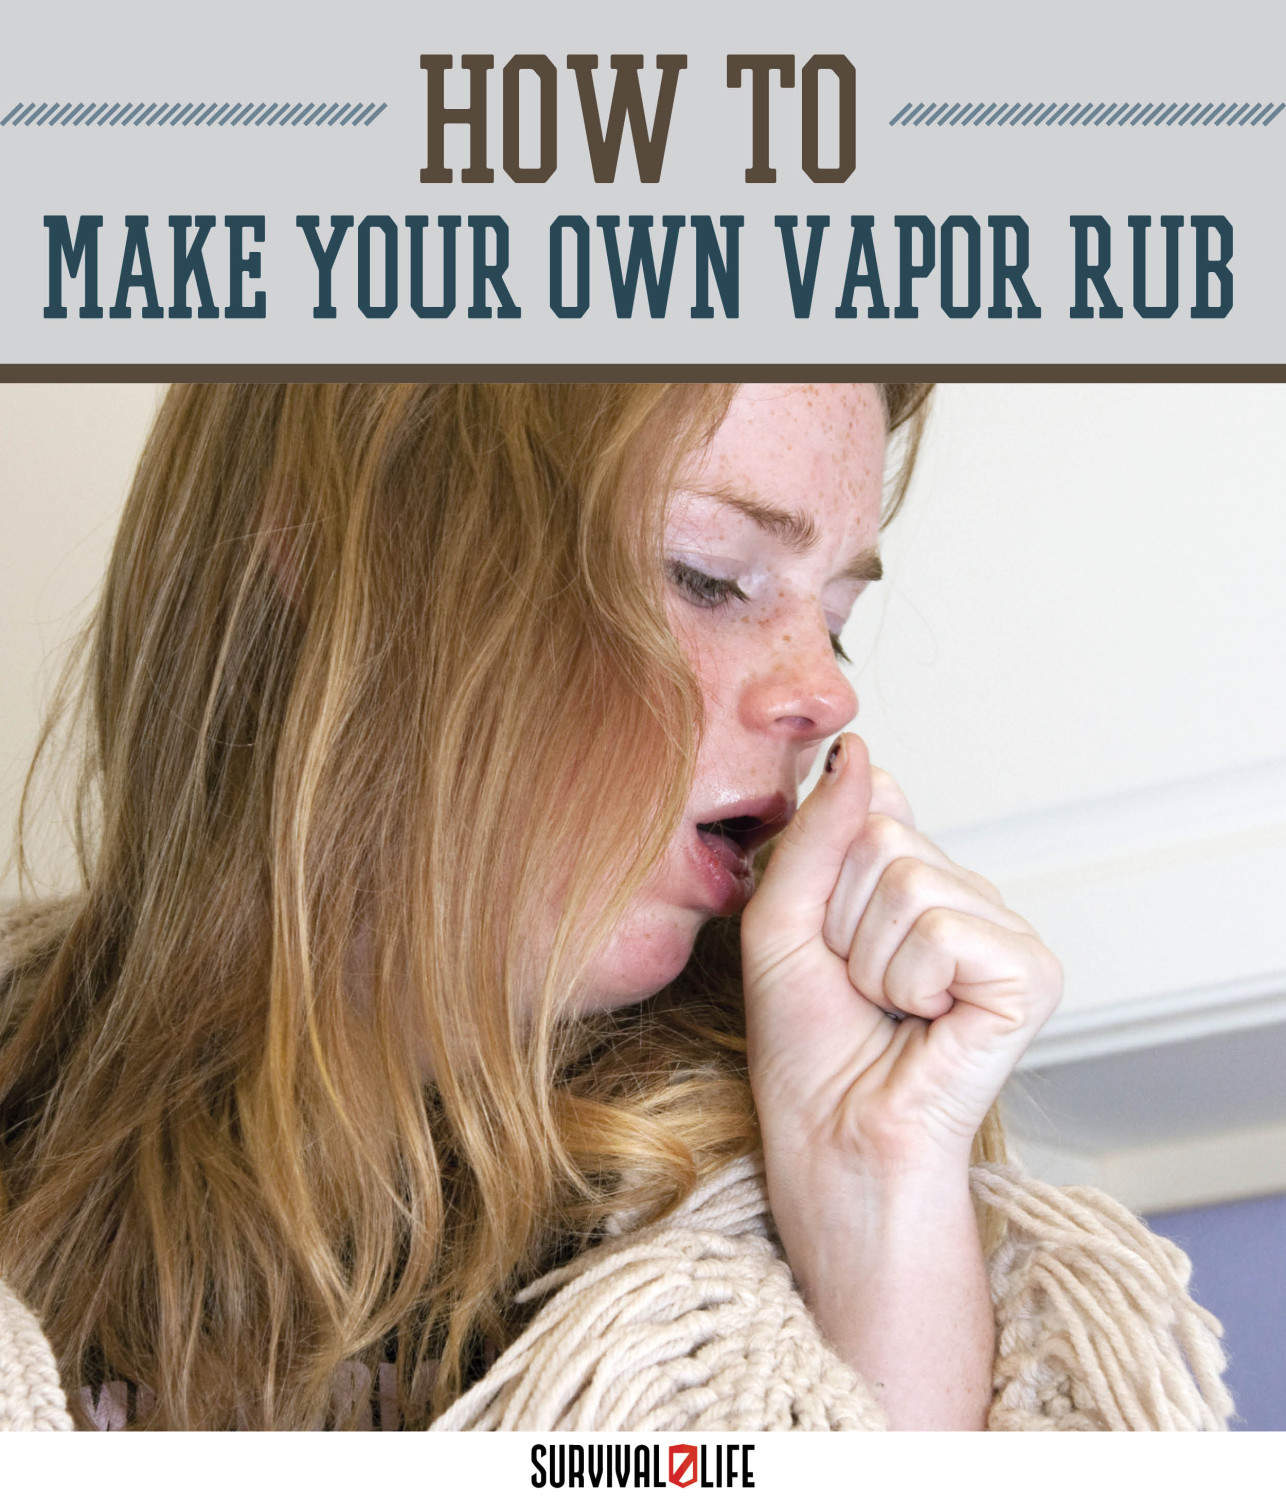 DIY Vapor Rub for Cough and Congestion by Survival Life at http://survivallife.com/2015/05/13/diy-healing-vapor-rub/